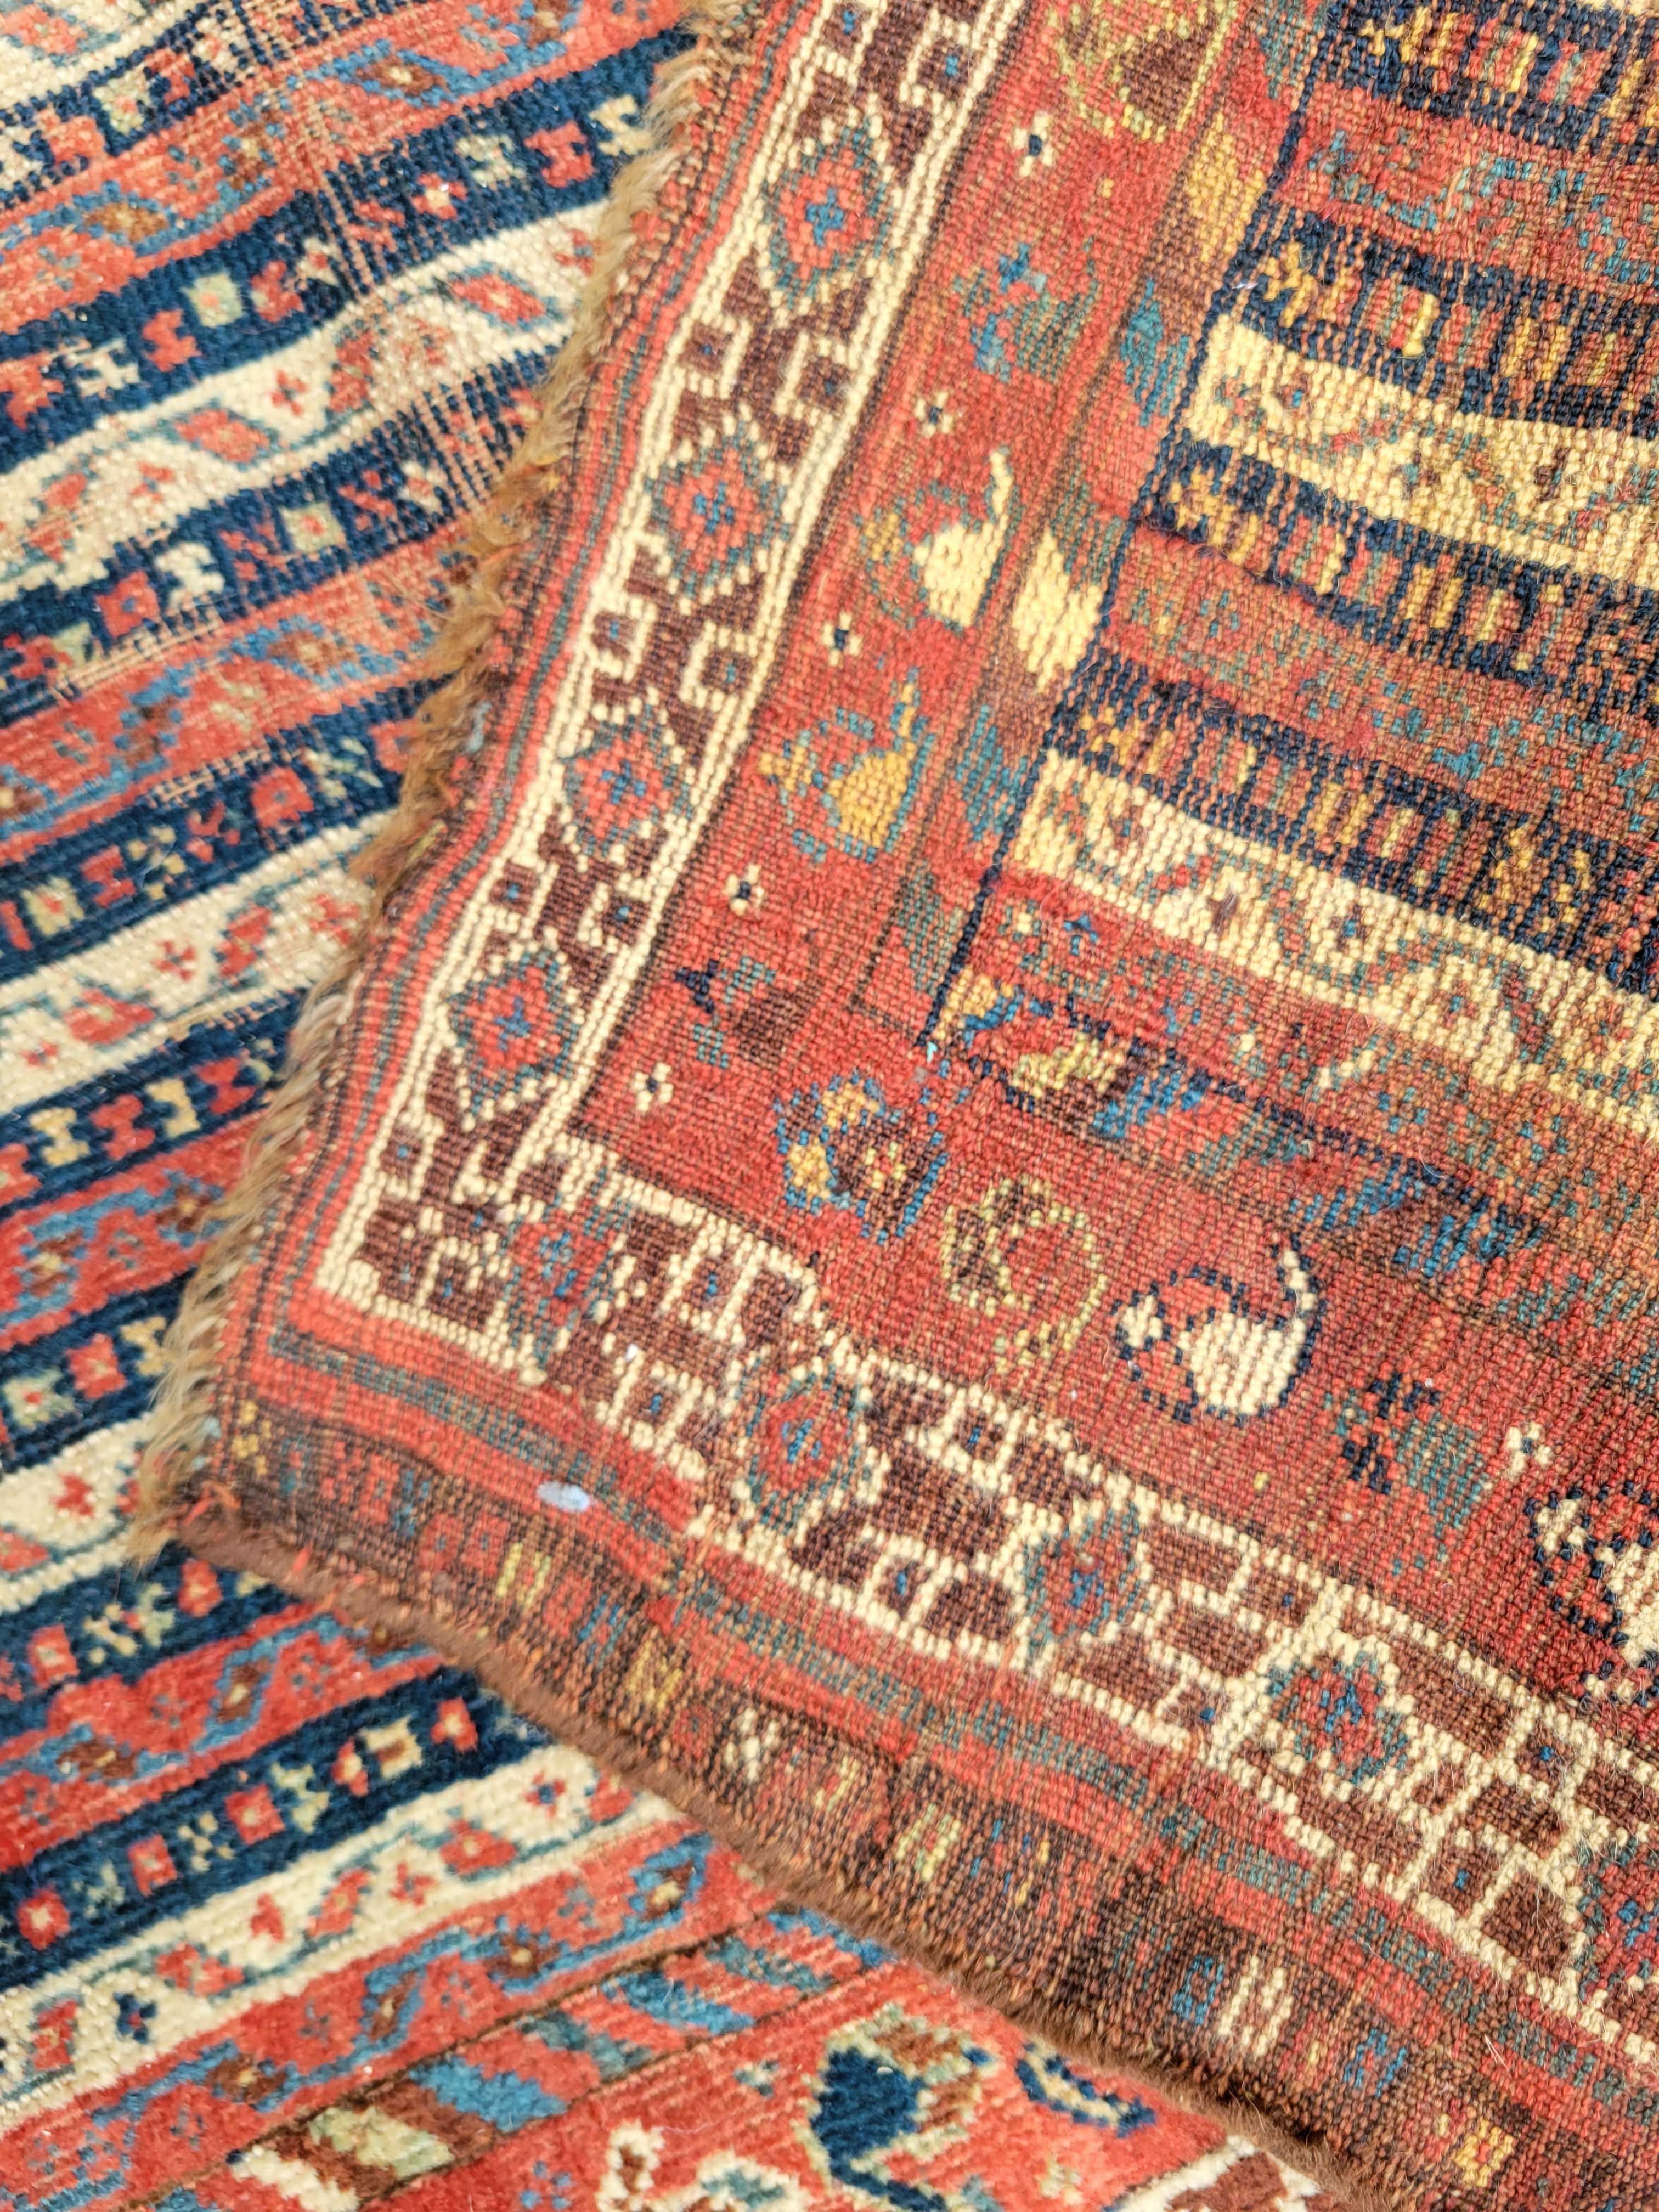 Antique Tribal Oriental Carpet